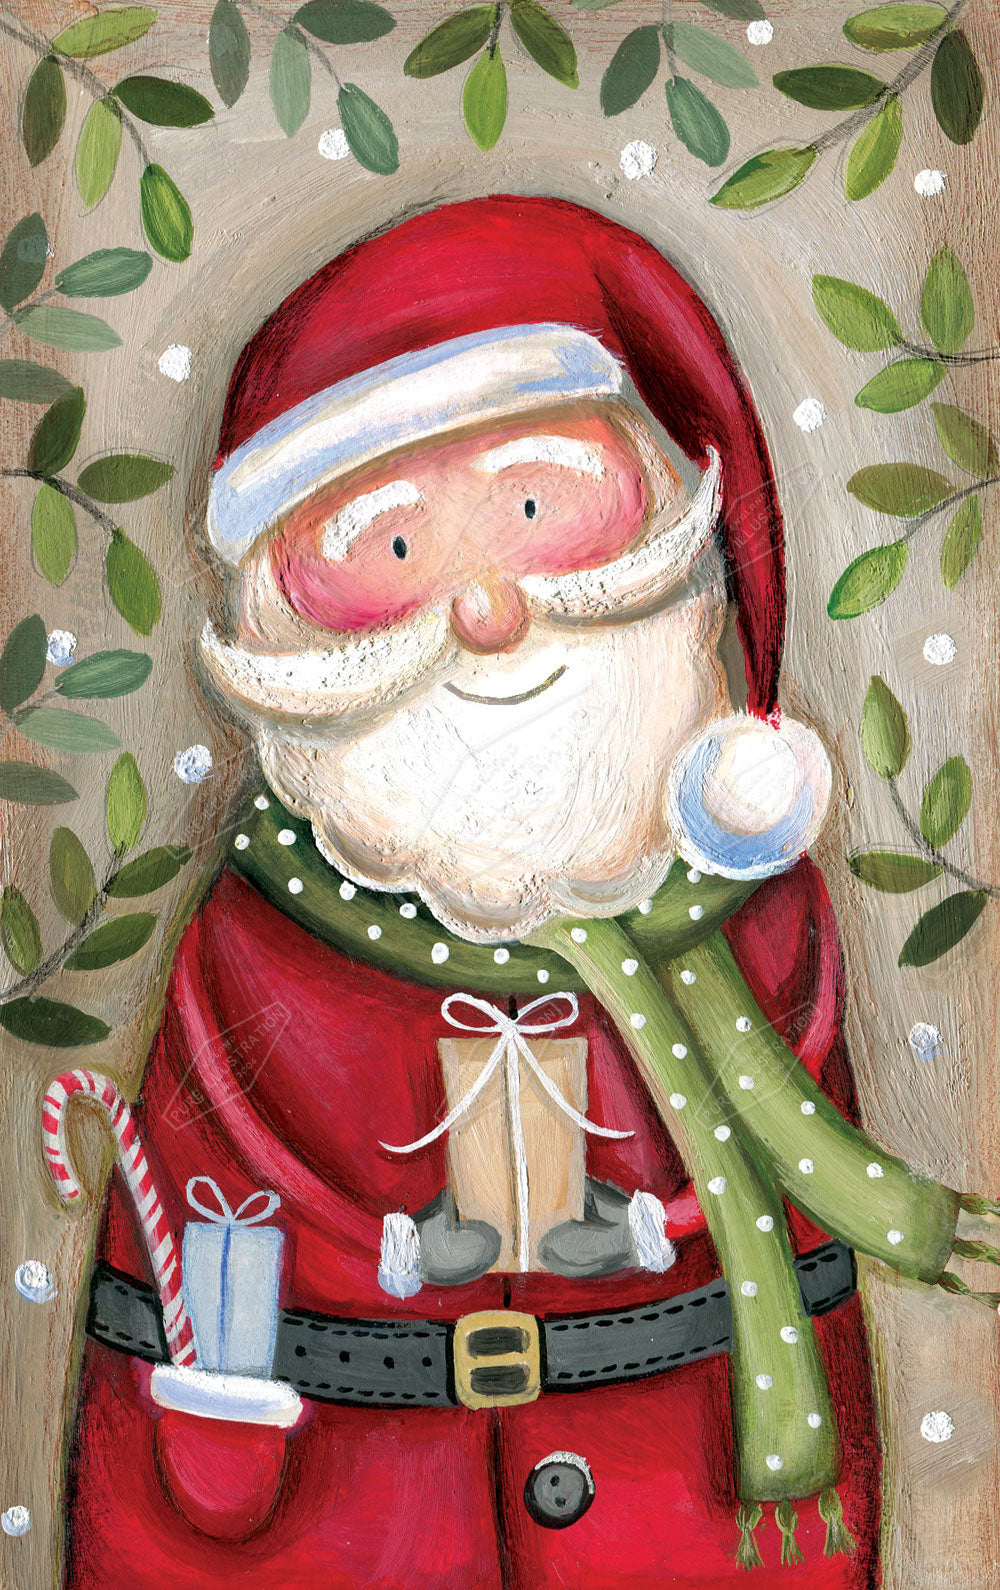 00023020DEV - Deva Evans is represented by Pure Art Licensing Agency - Christmas Greeting Card Design